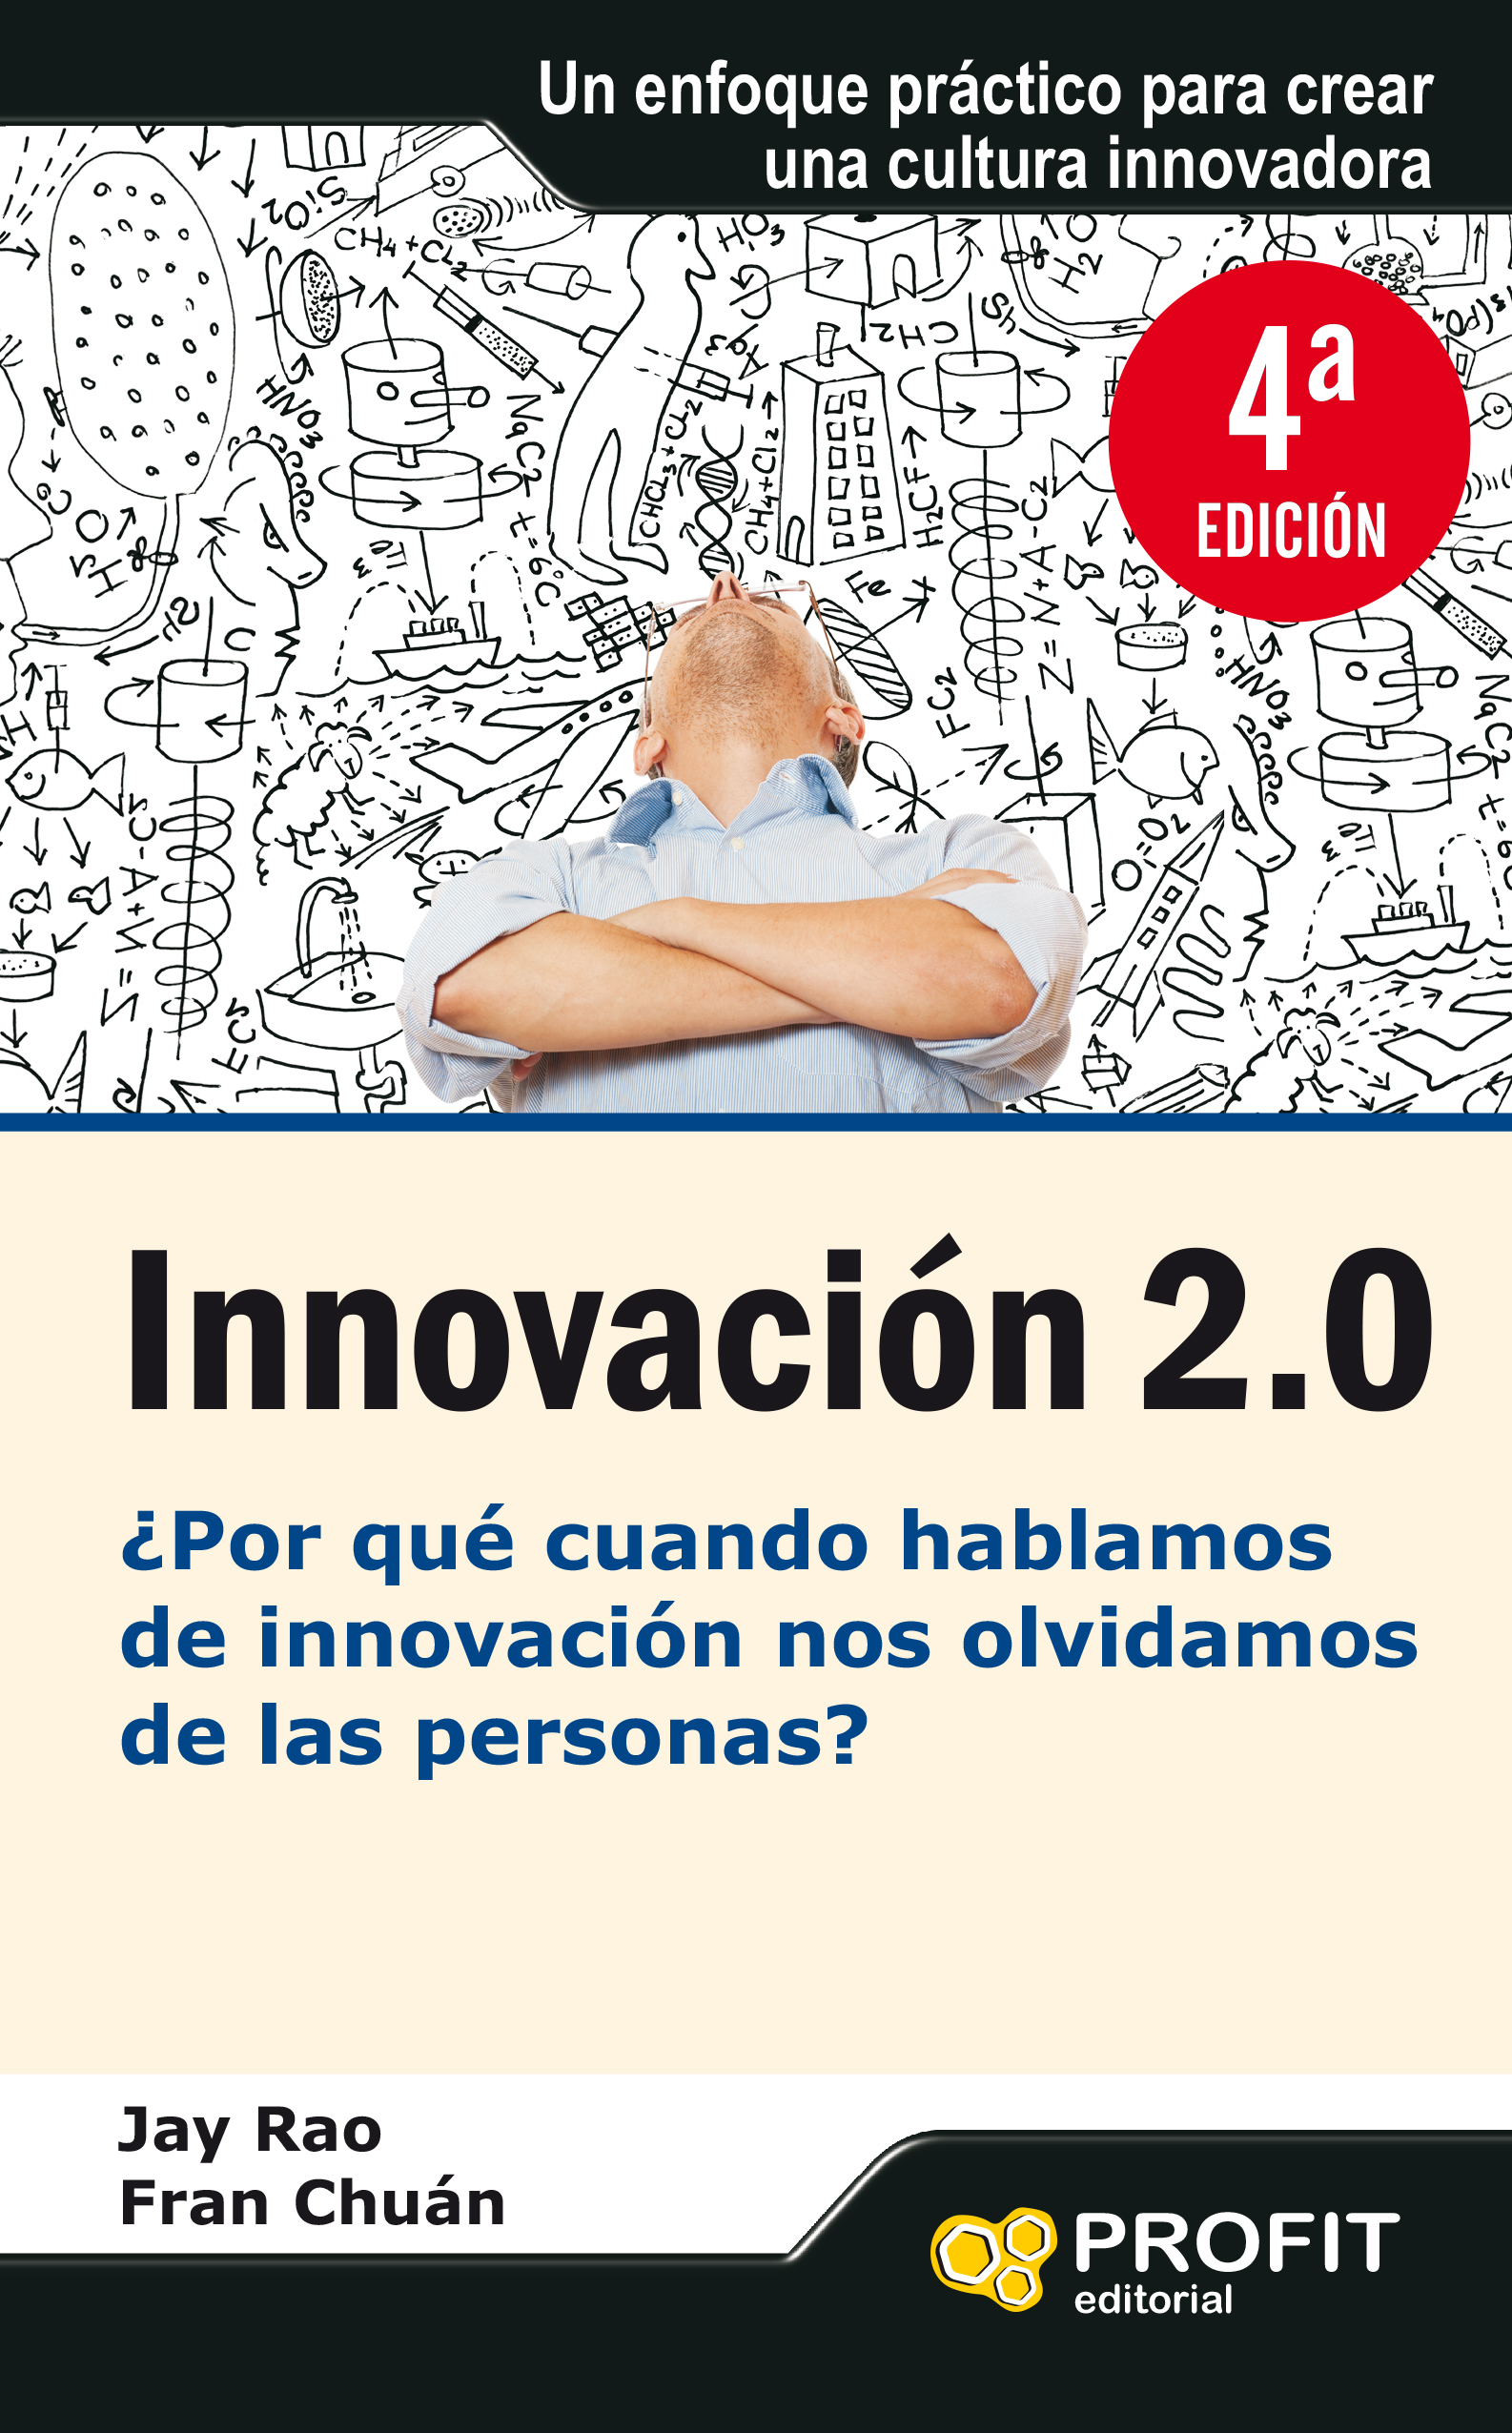 Innovación 2.0 | Fran Chuan | Libros de empresa y negocios